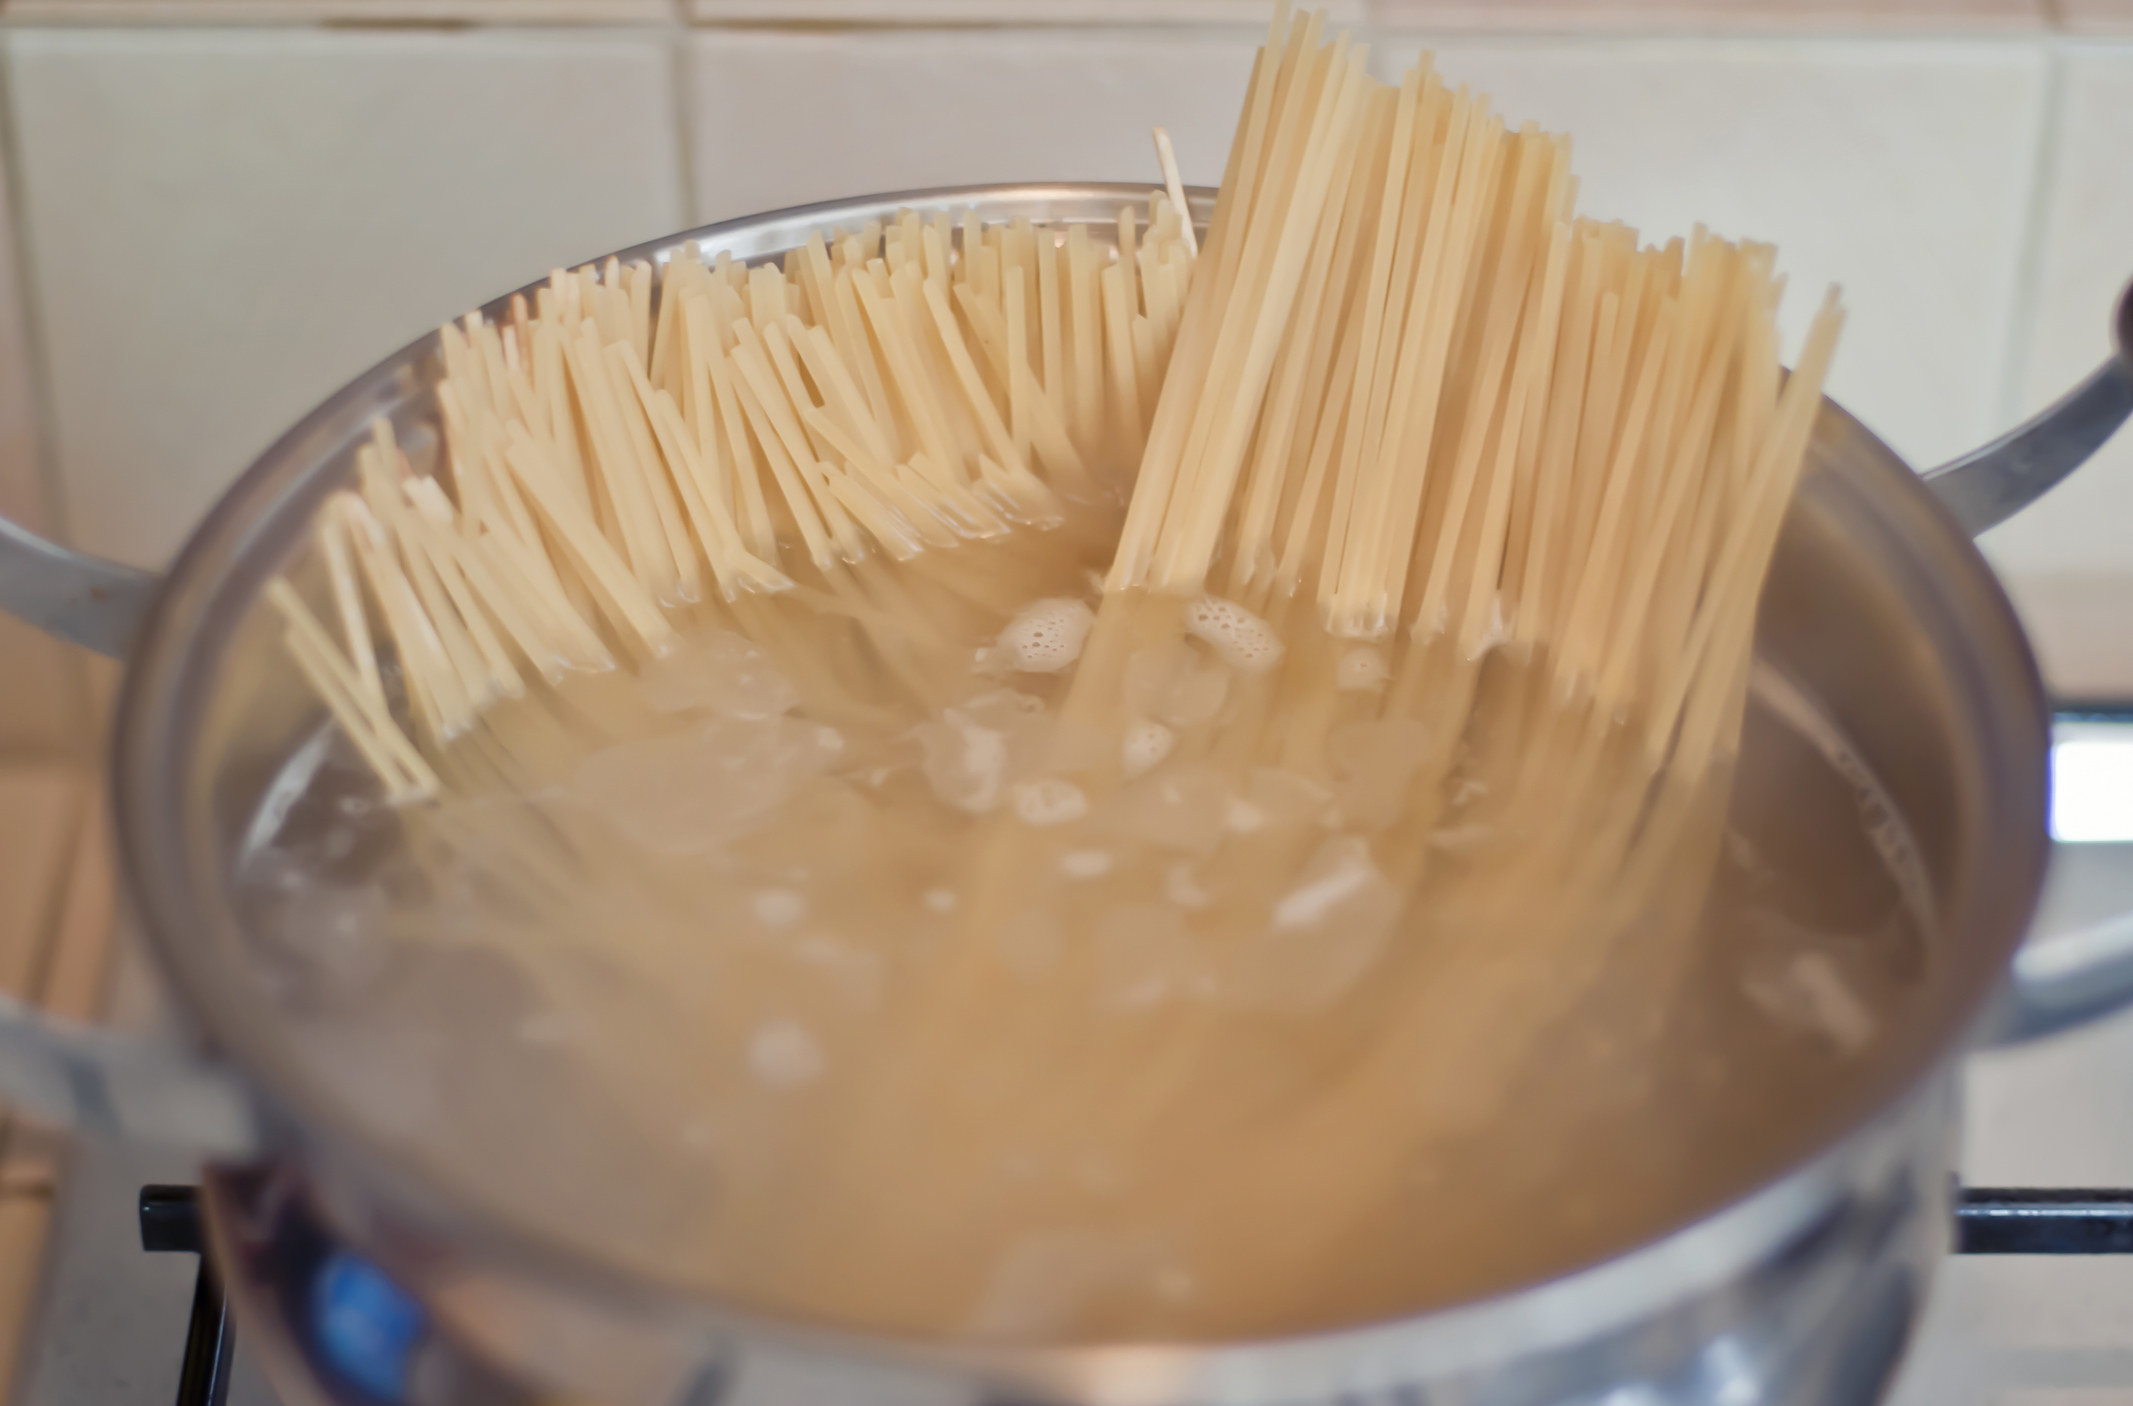 Spaghetti in a pot.